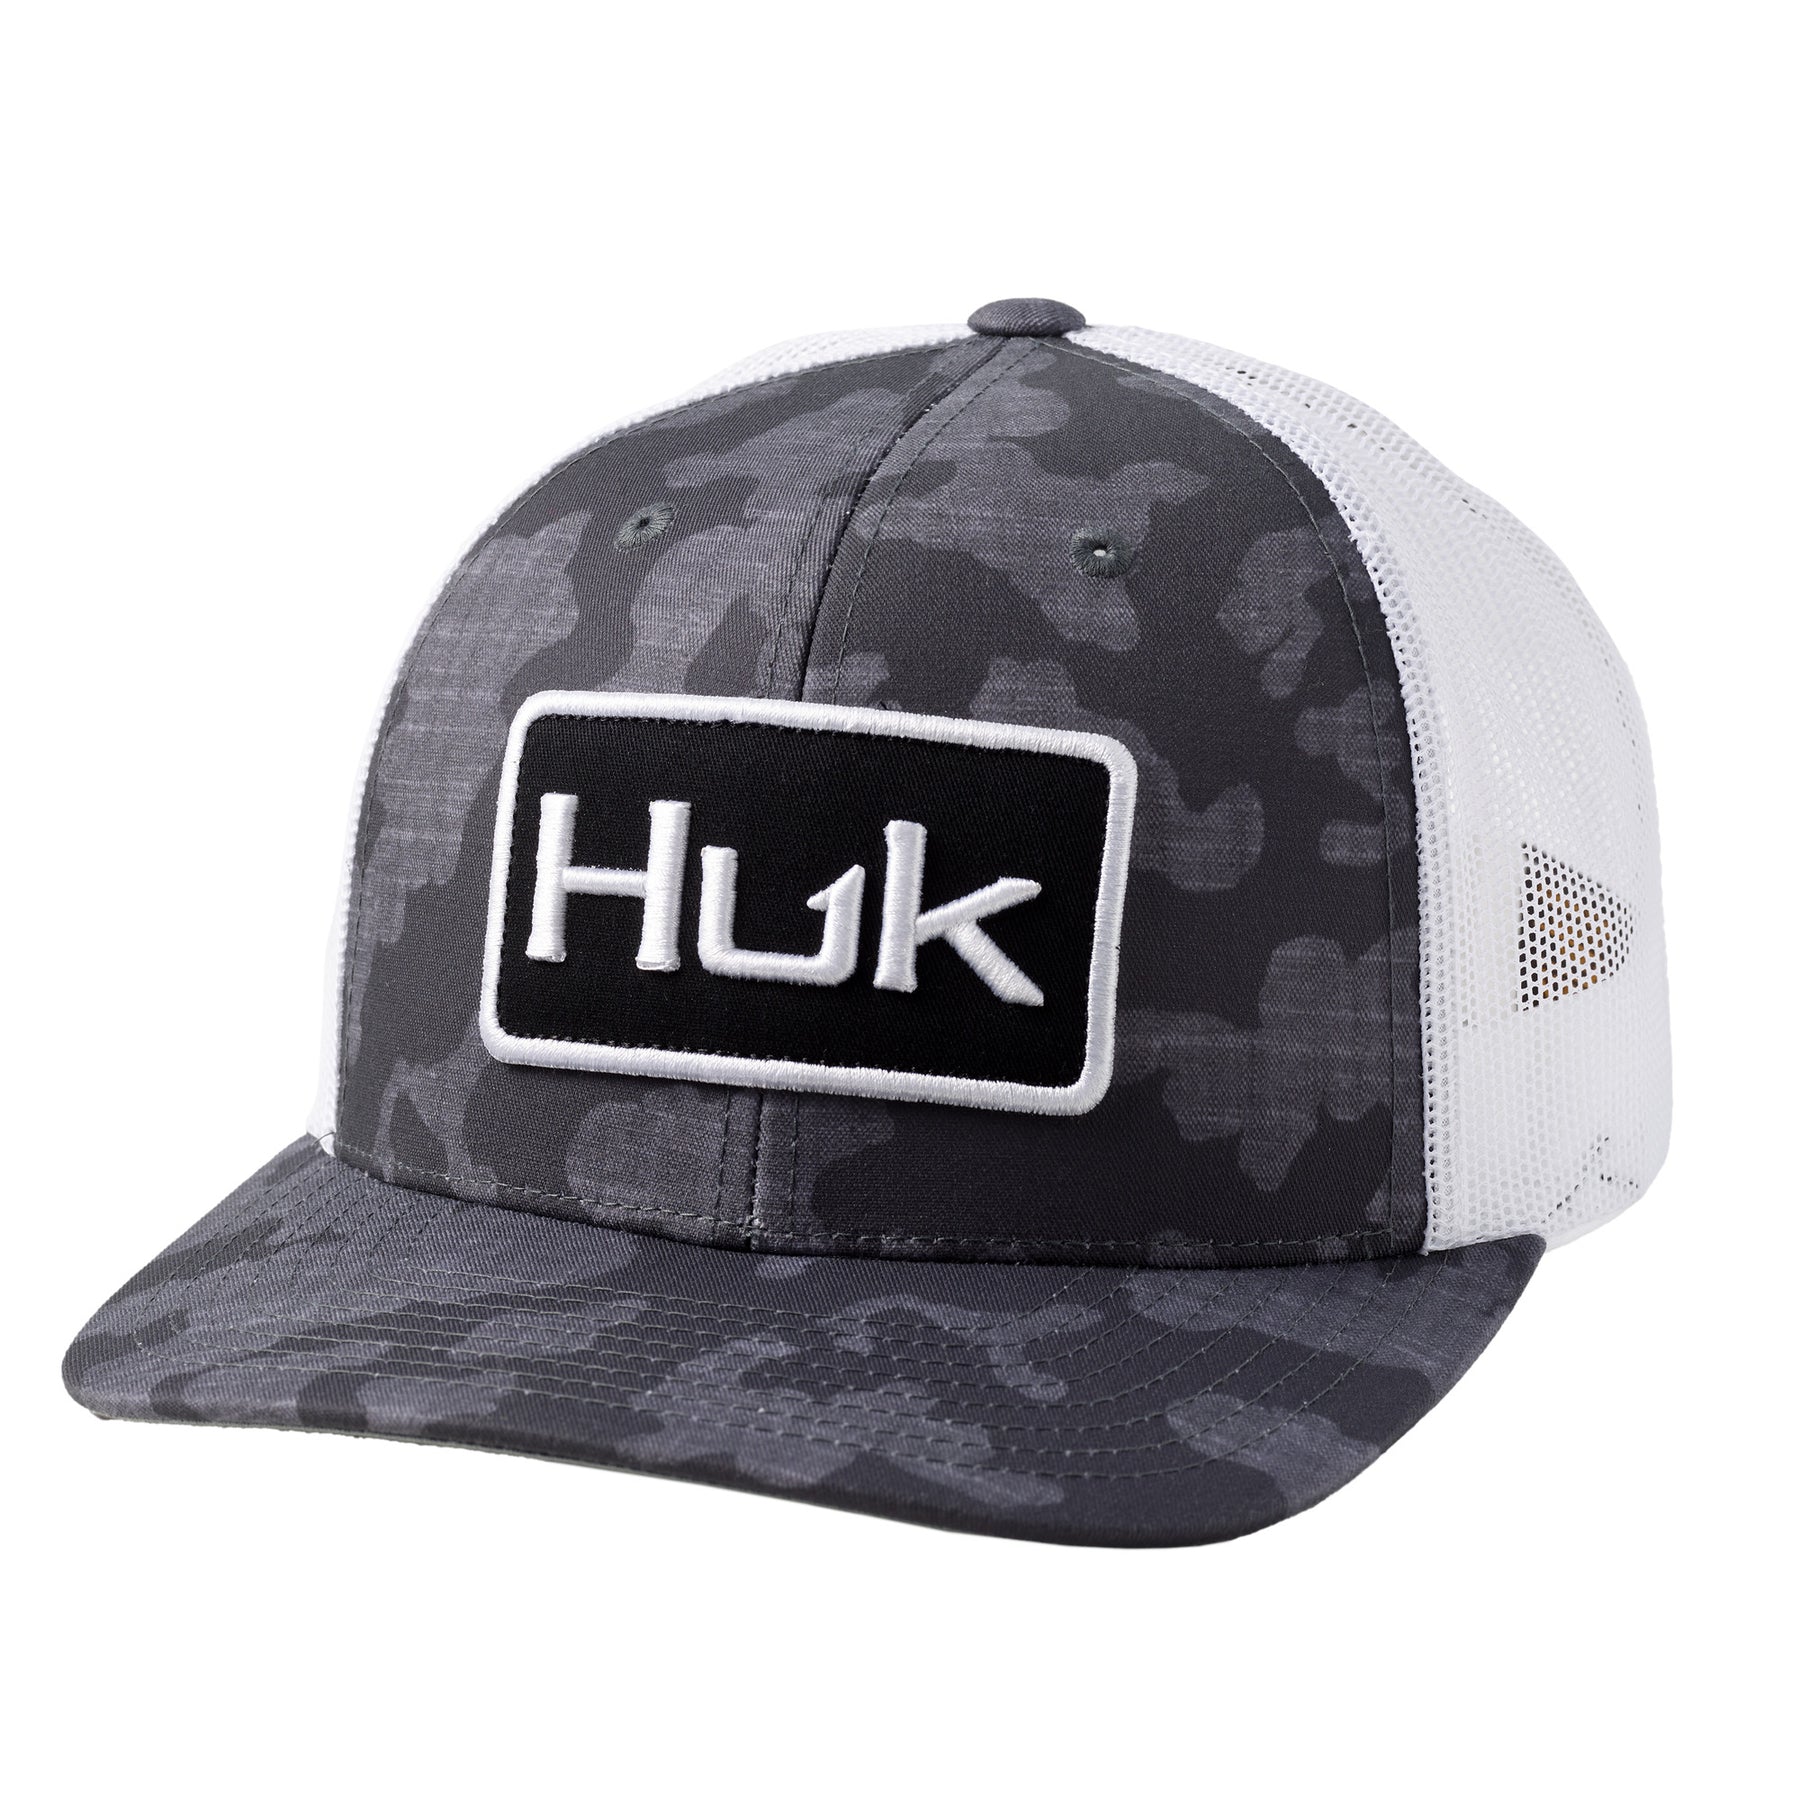 Huk Trucker Hat